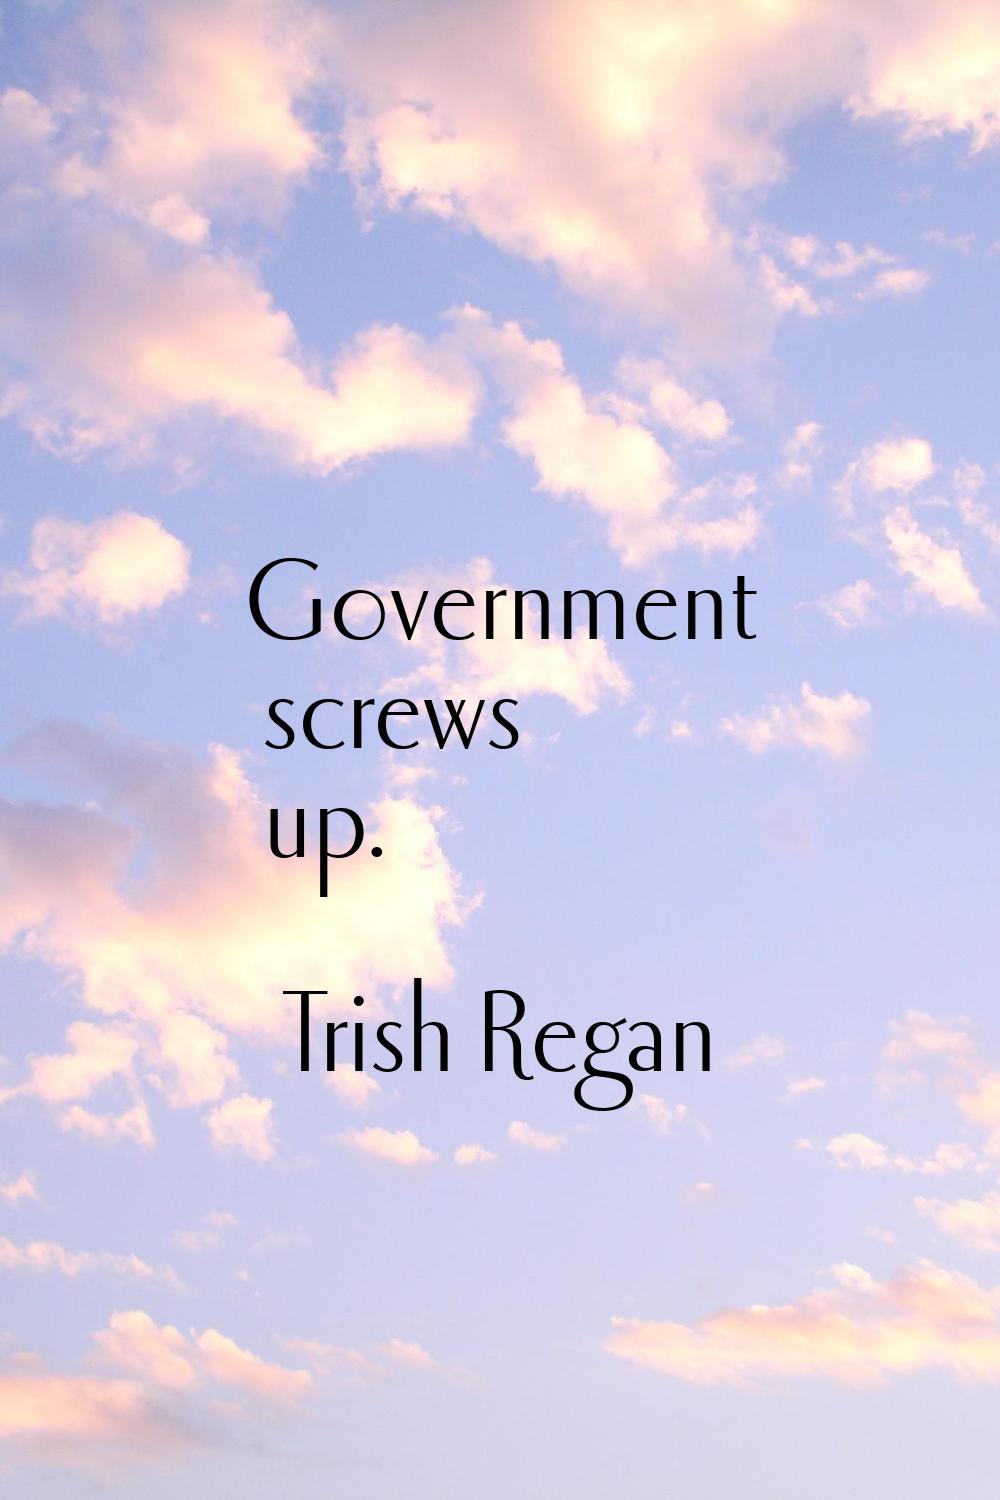 Government screws up.